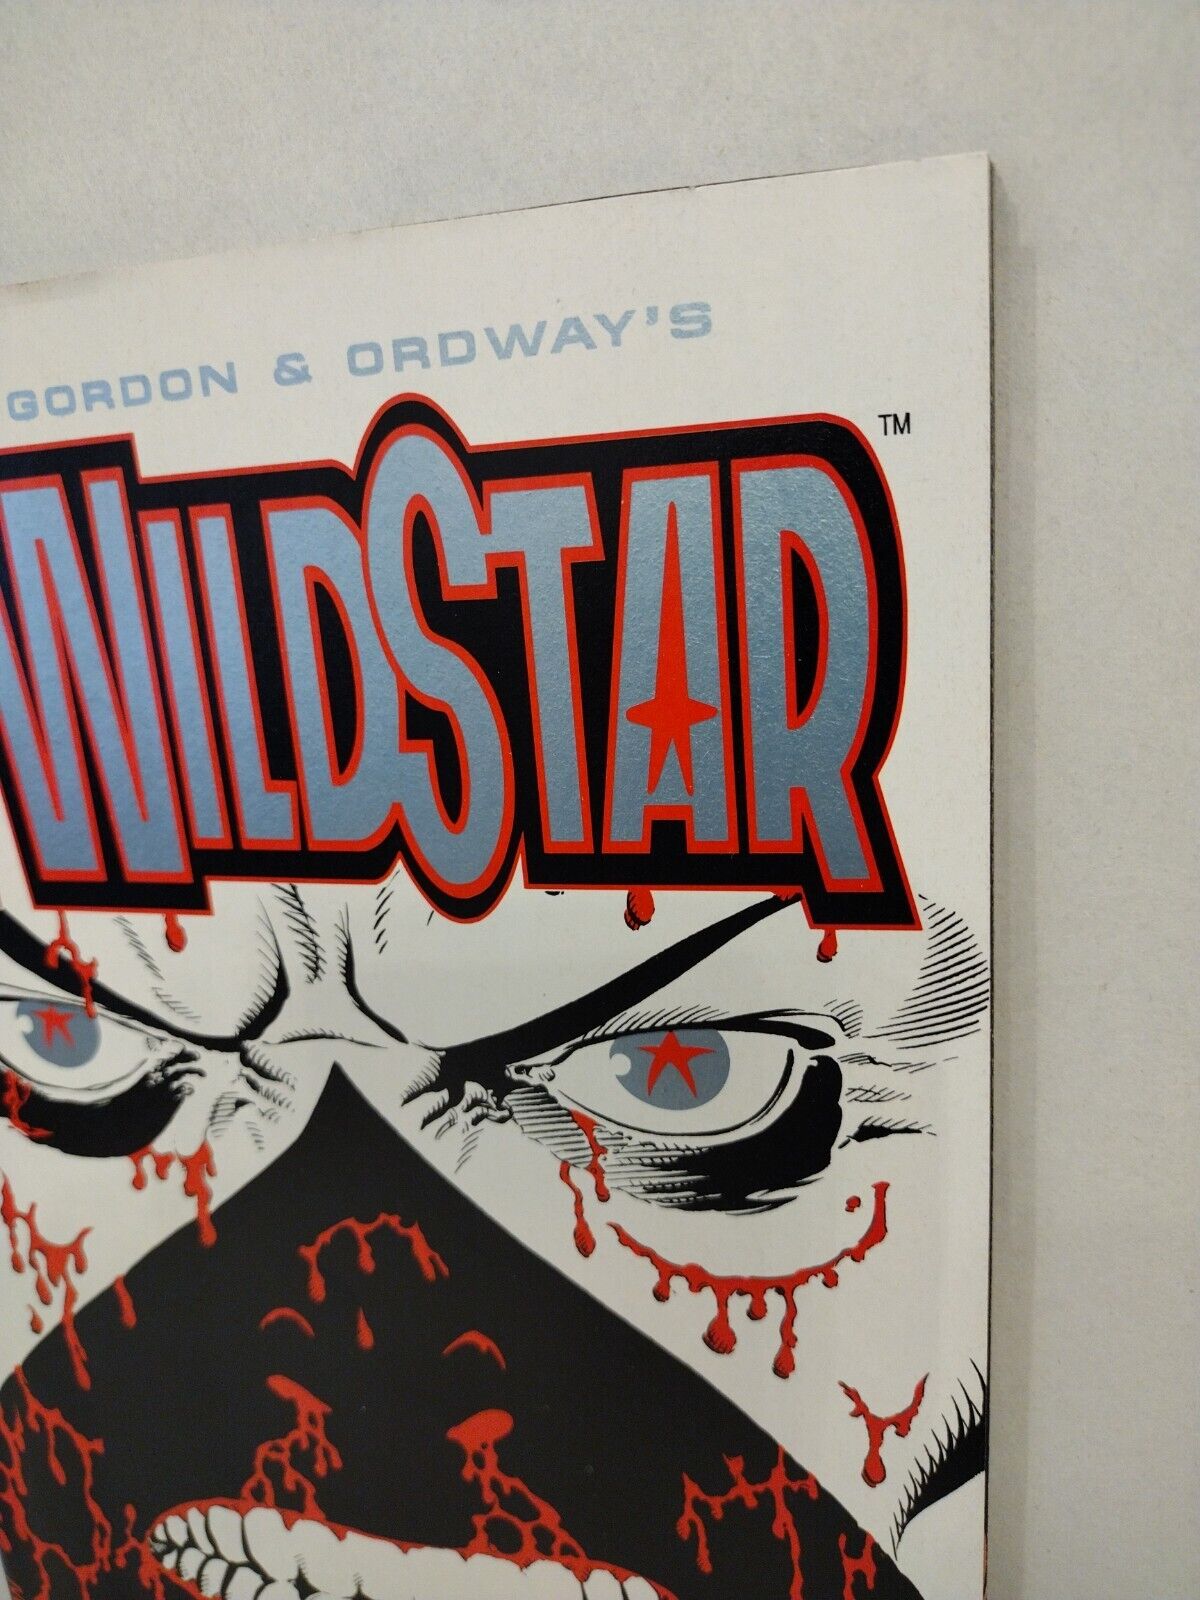 Wildstar Sky Zero (1993) #1 3 Newstand Image Comic Lot Jerry Ordway Al Gordon 